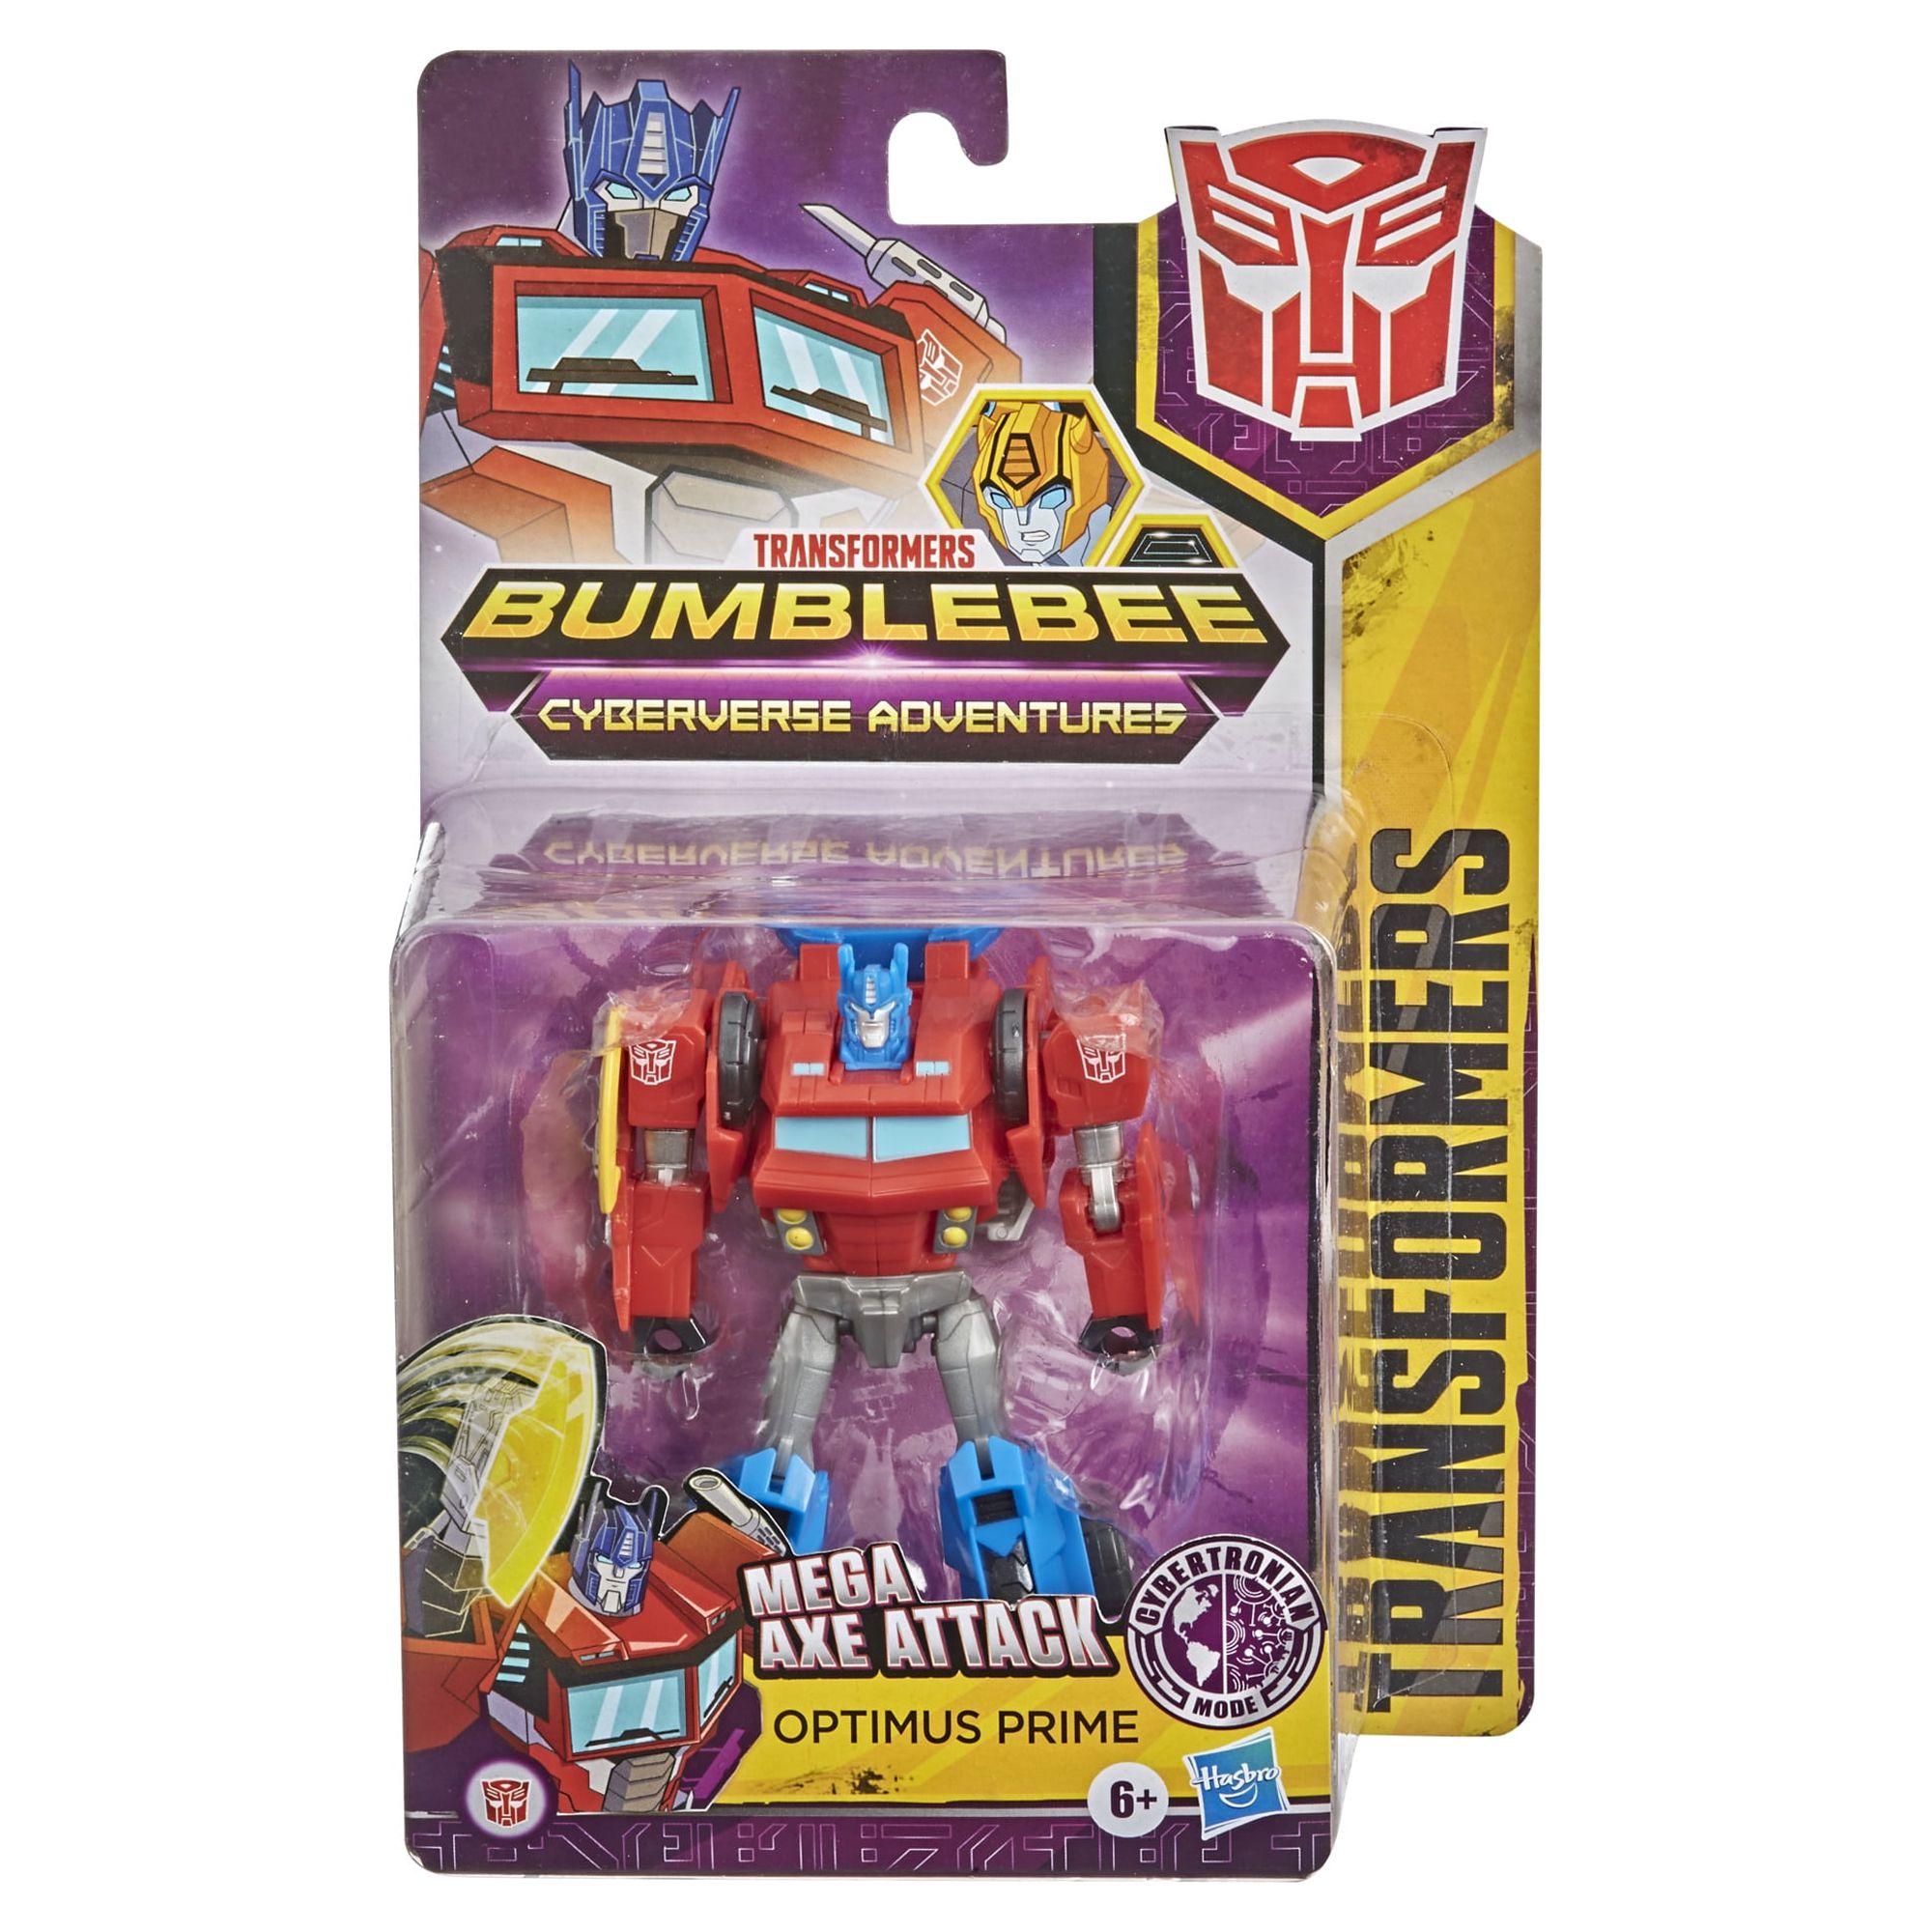 Transformers Bumblebee Cyberverse Adventures Warrior Optimus Prime Figure - image 2 of 9